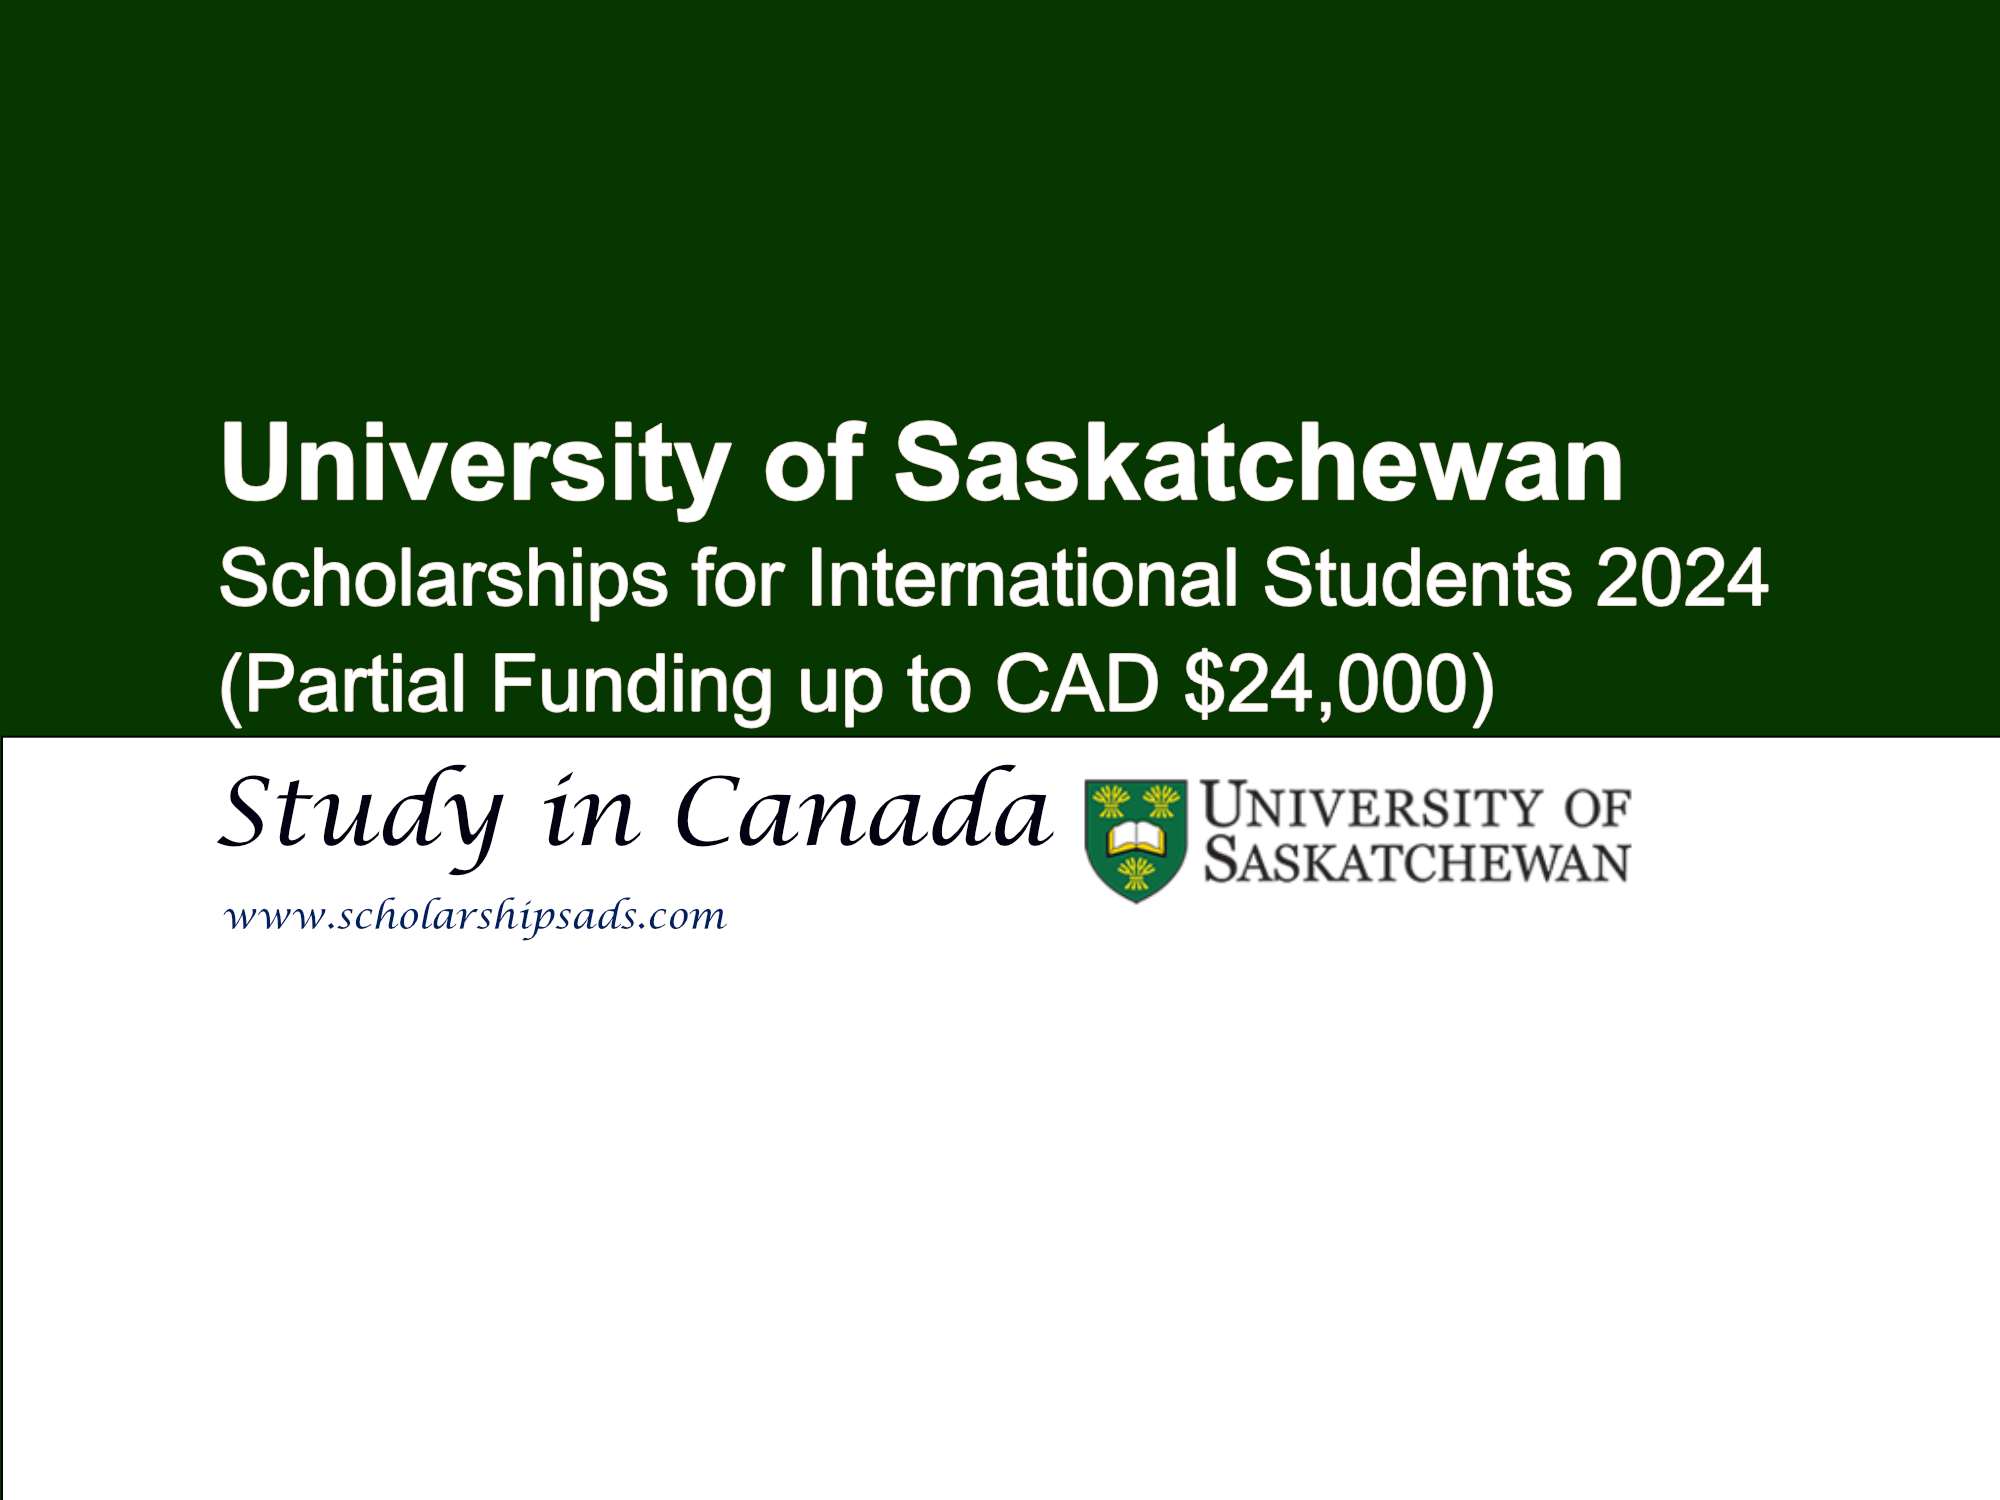 University of Saskatchewan Scholarships for International Students 2024, Canada.